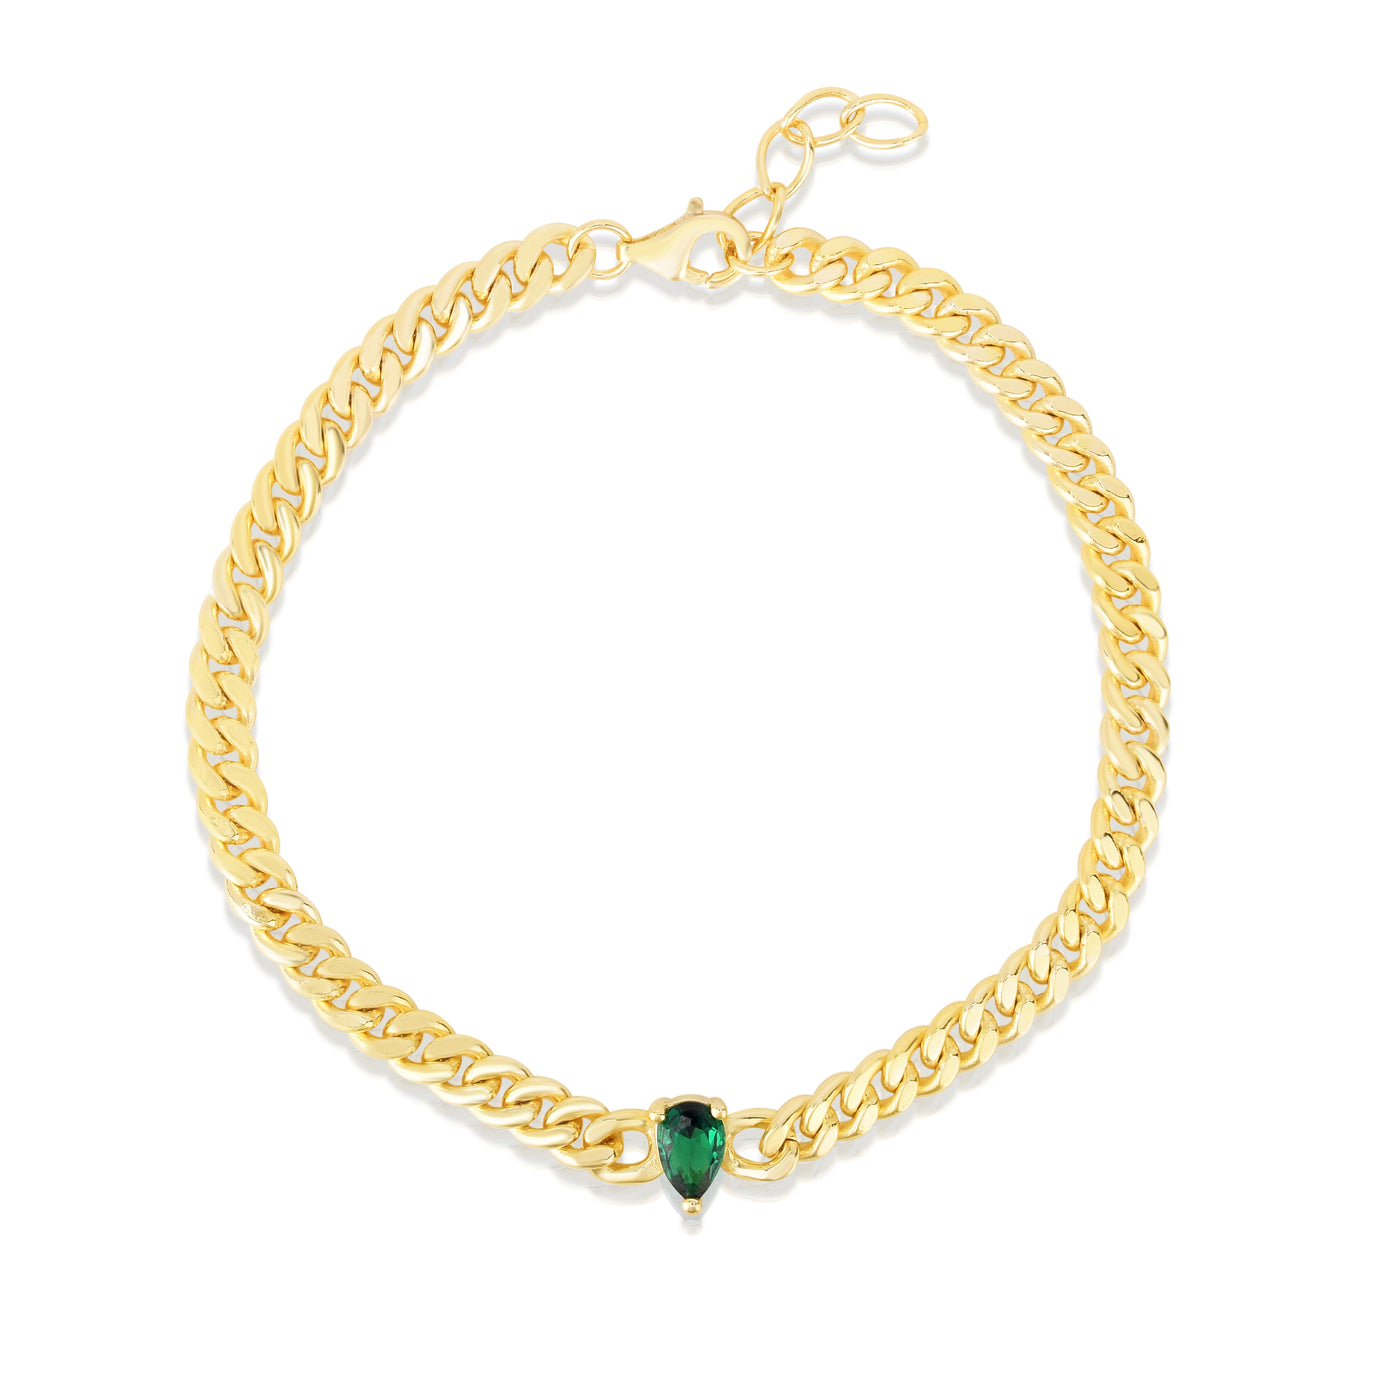 EMERY - The Emerald Cuban Link Bracelet